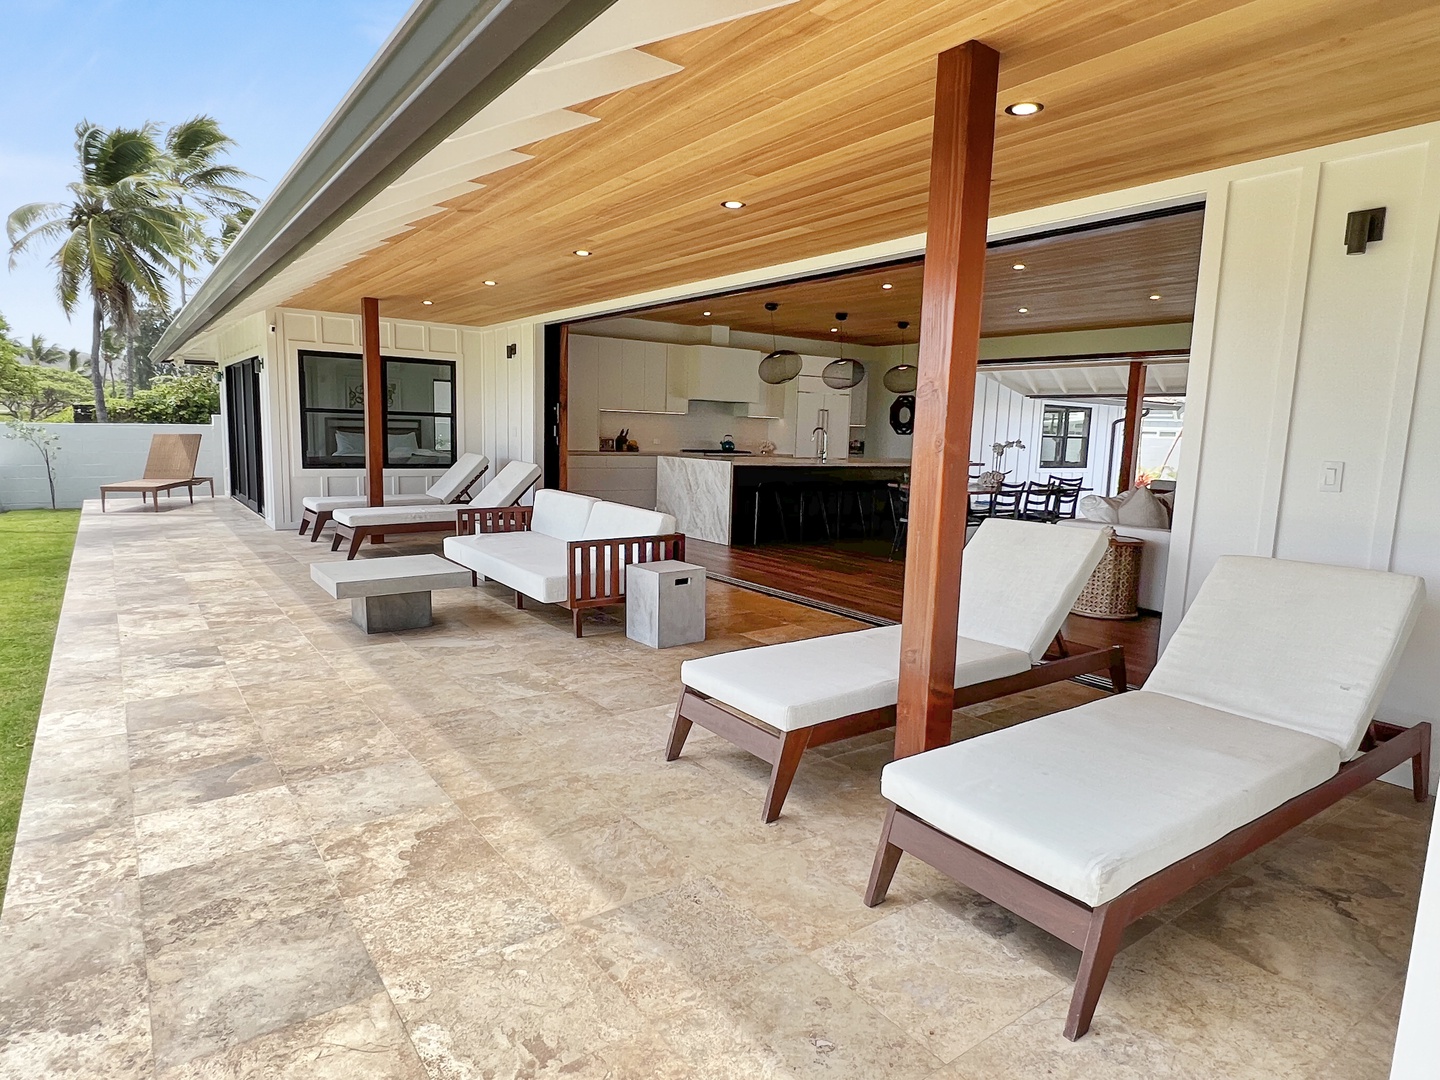 Kailua Vacation Rentals, Kailua Beach Villa - The spacious lanai has plenty of seating and chaise lounges to soak up the island sun